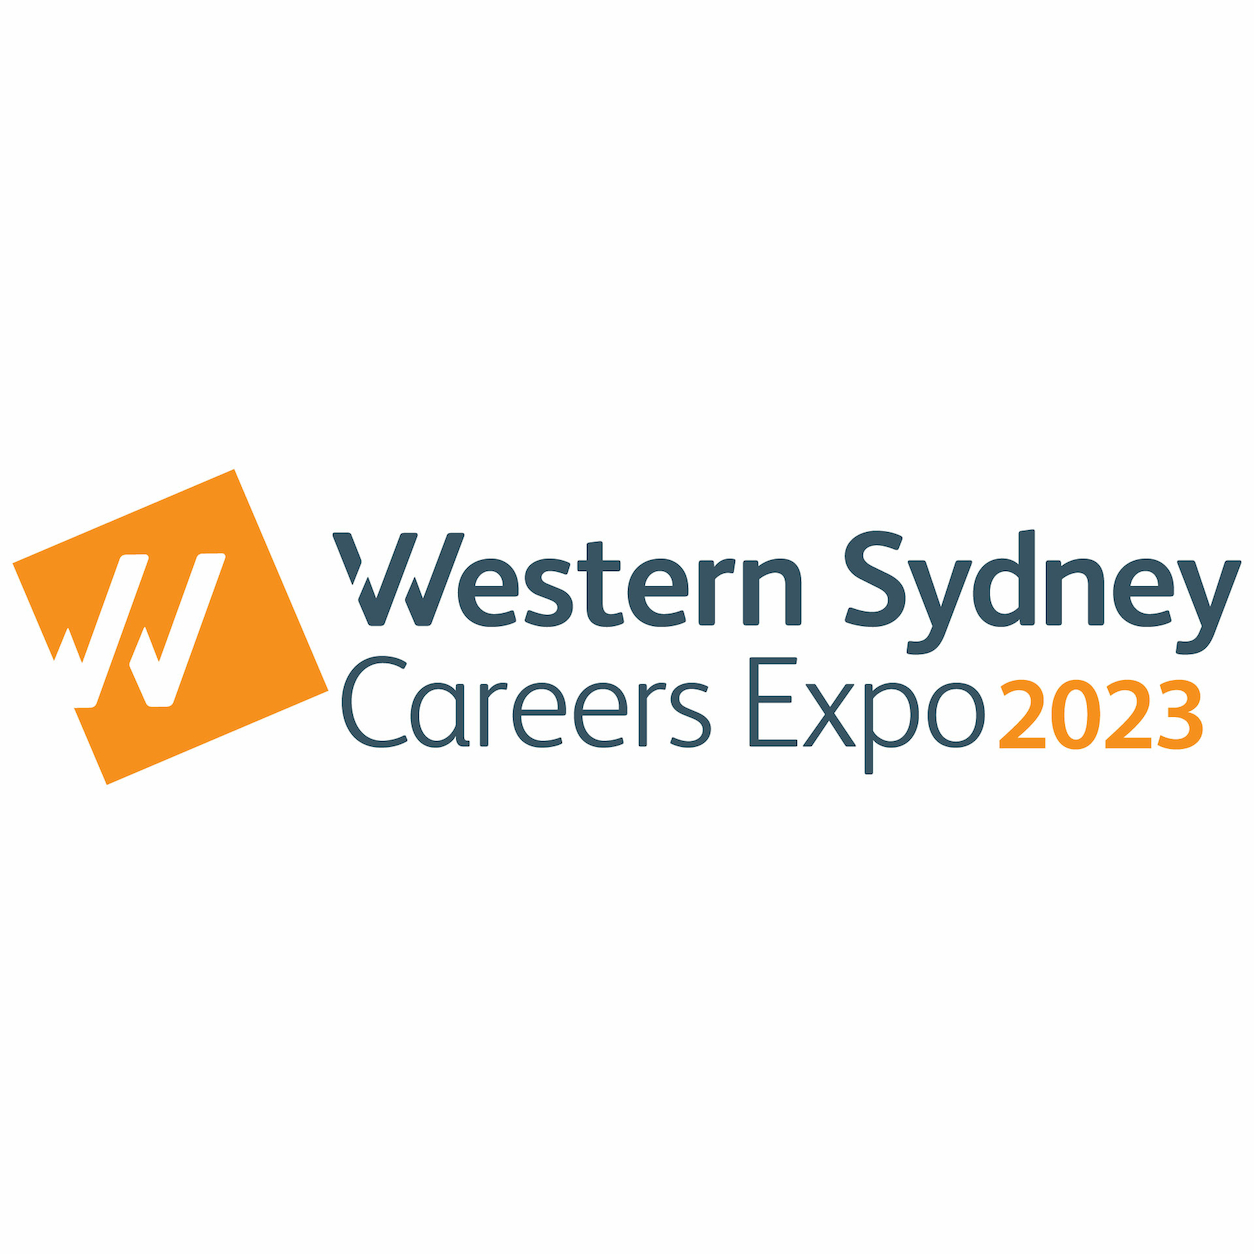 Western Sydney Careers Expo 2023 logo